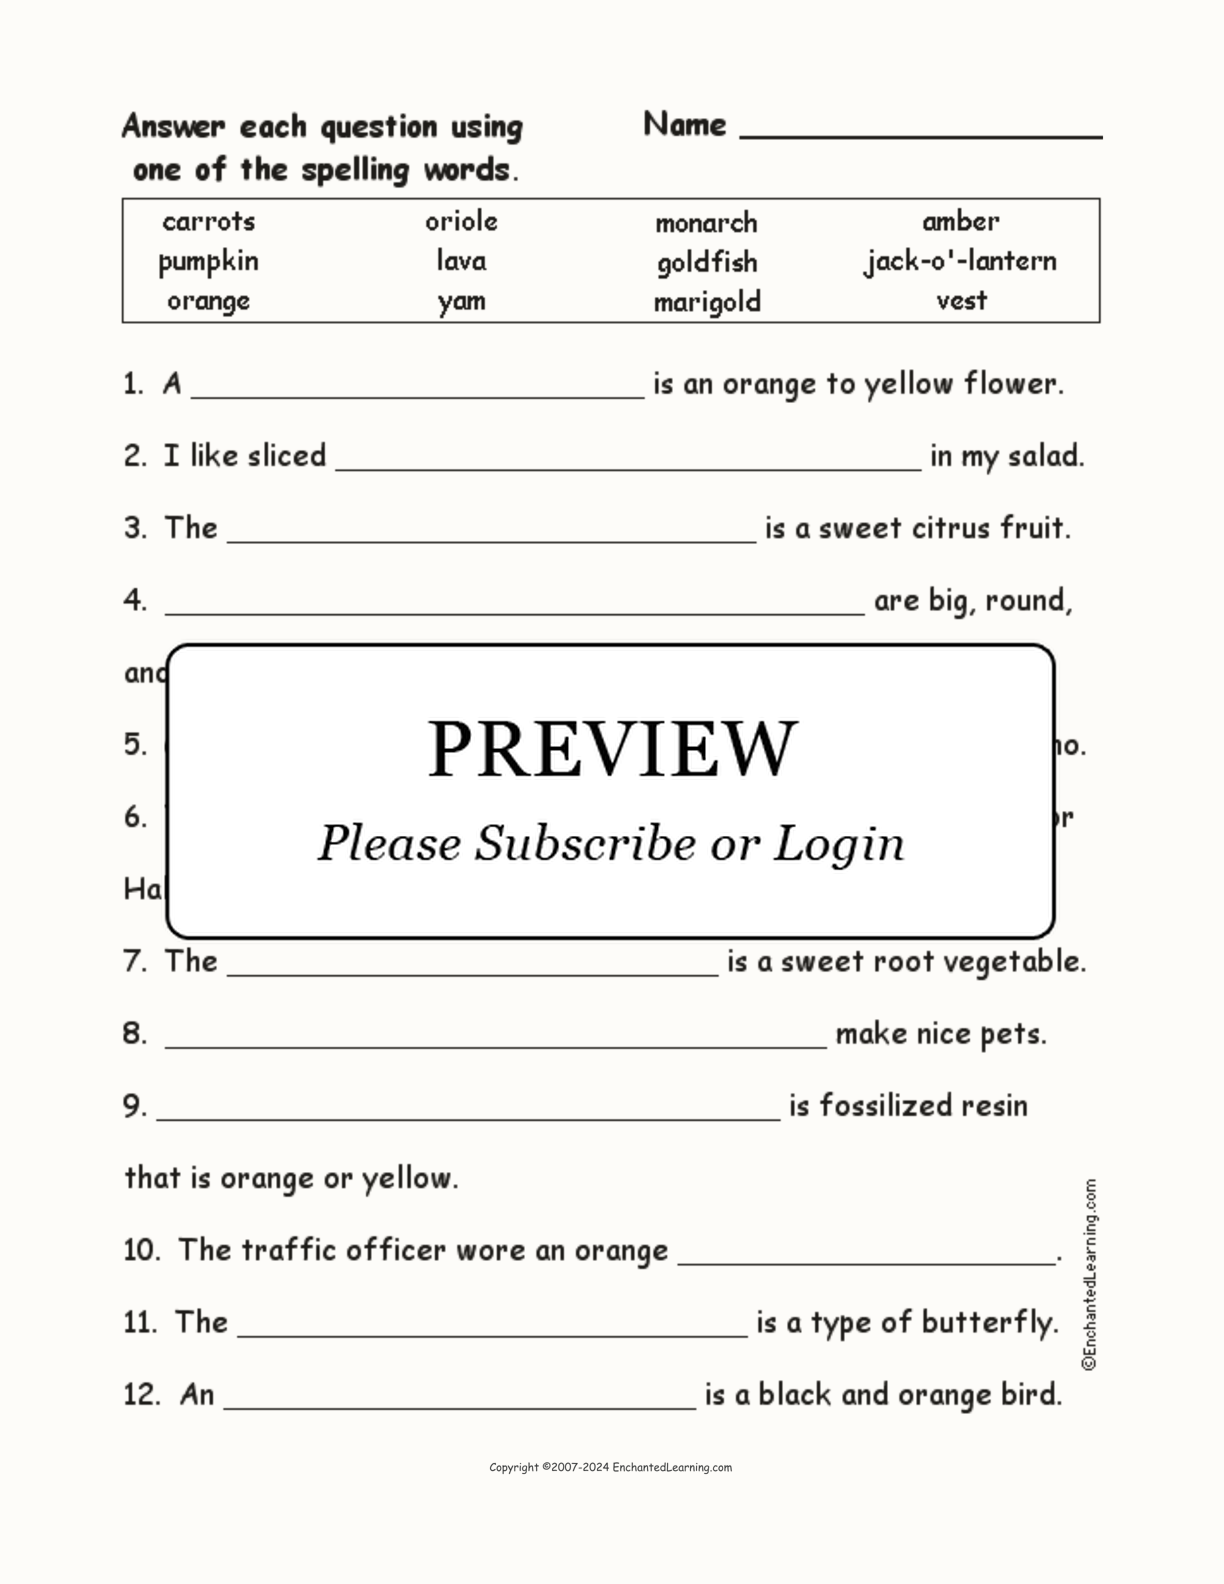 Orange Things: Spelling Word Questions interactive worksheet page 1